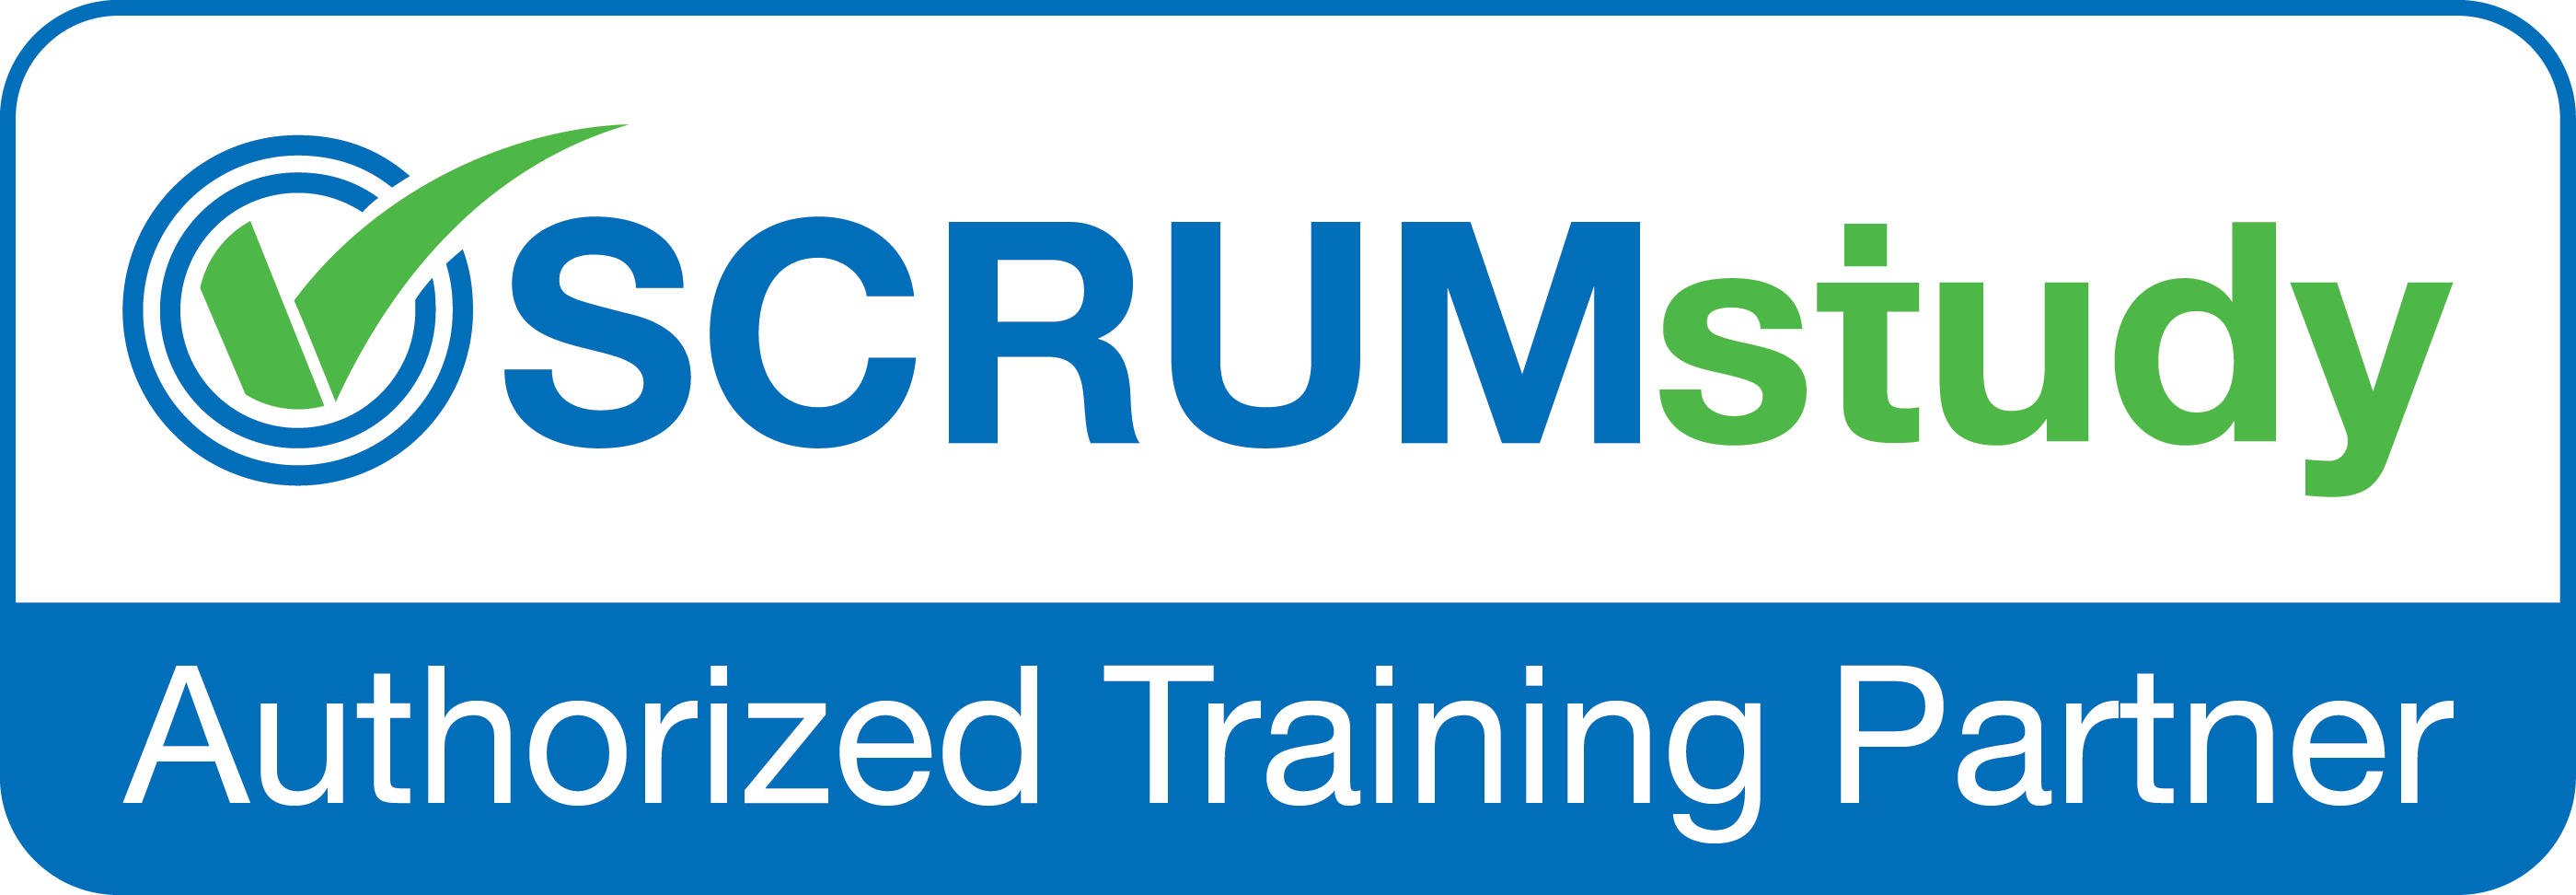 SCRUMstudy Authorised Training Partner